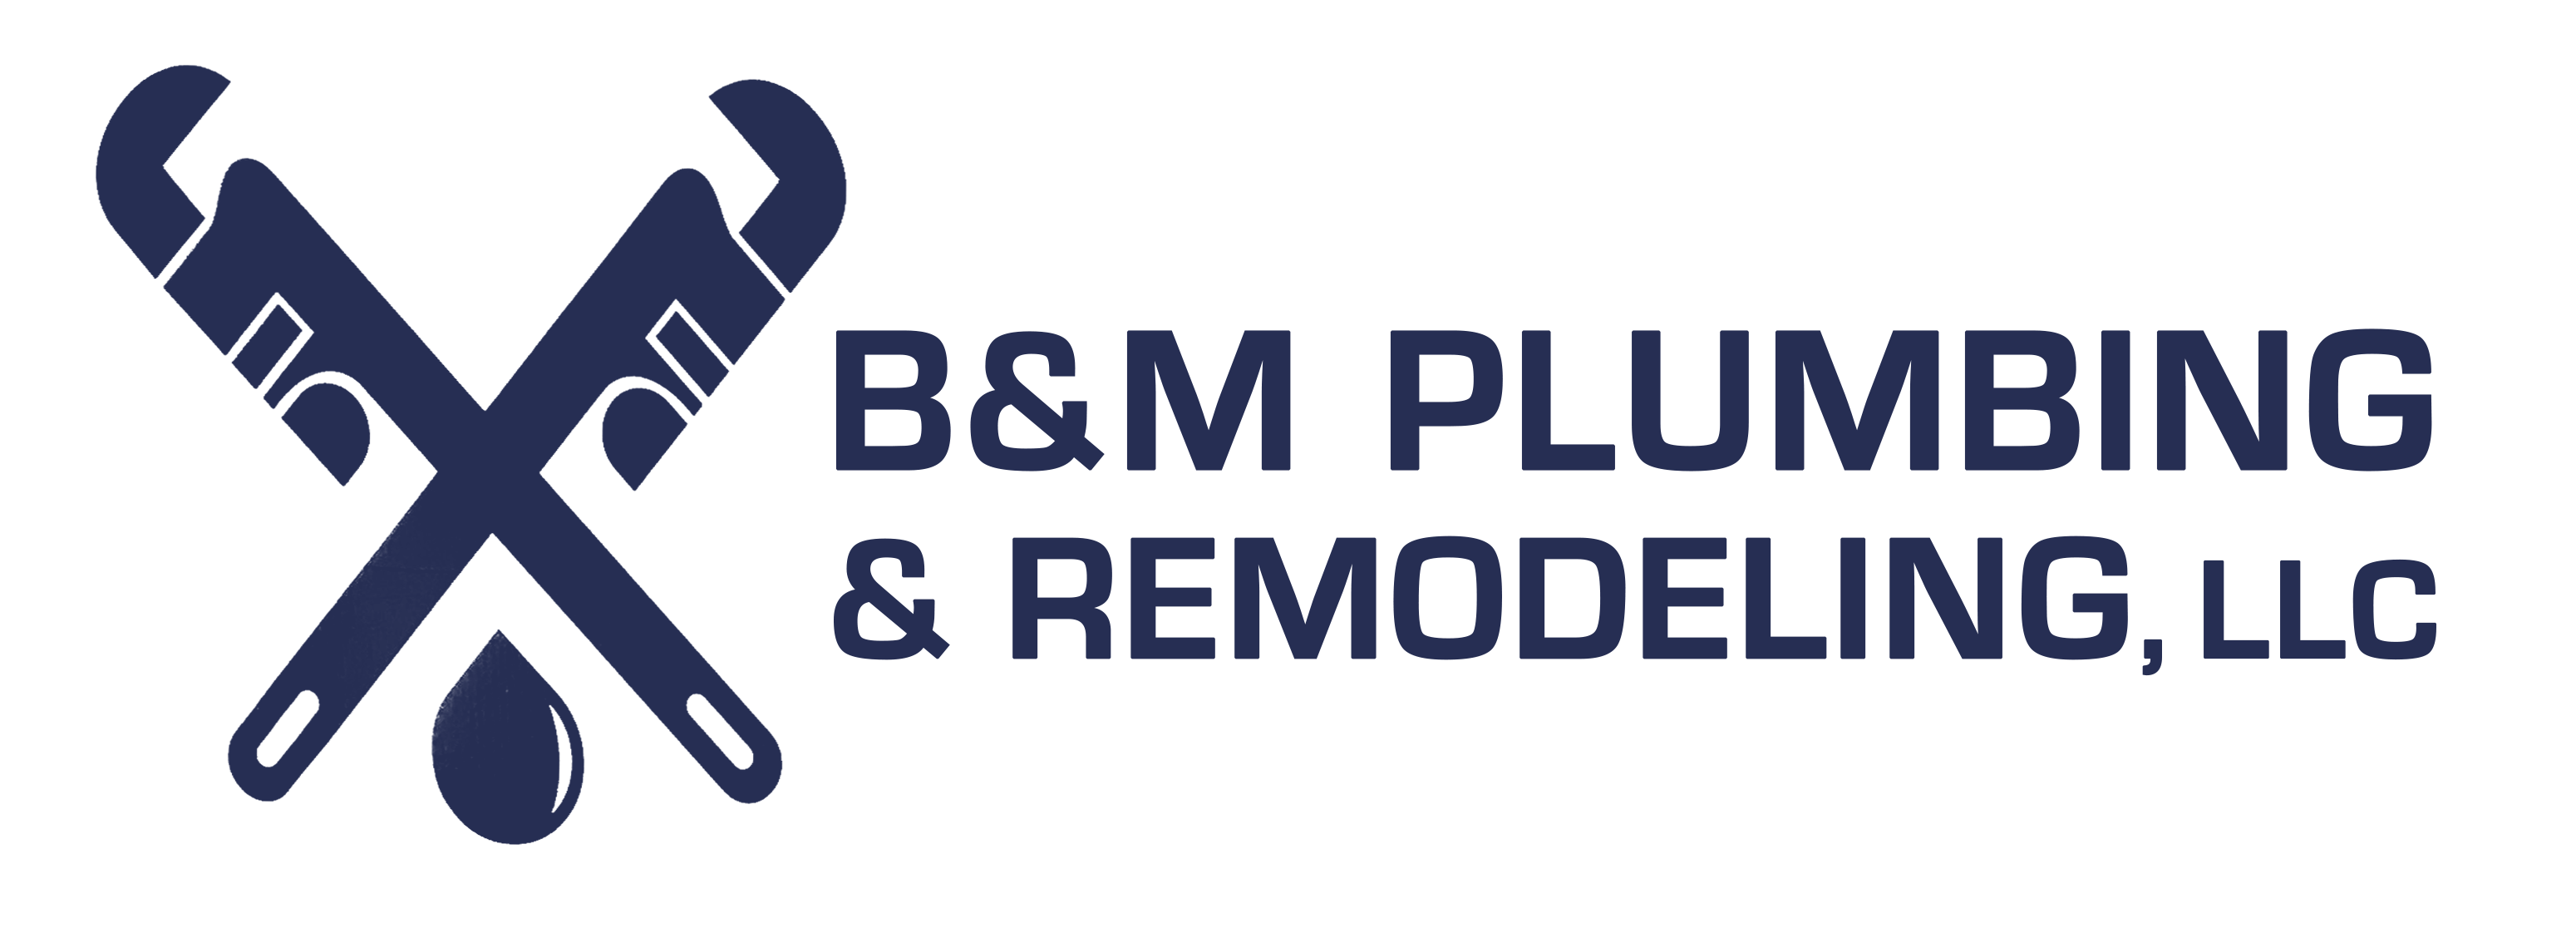 B & M Plumbing & Remodeling | Phoenix, MD